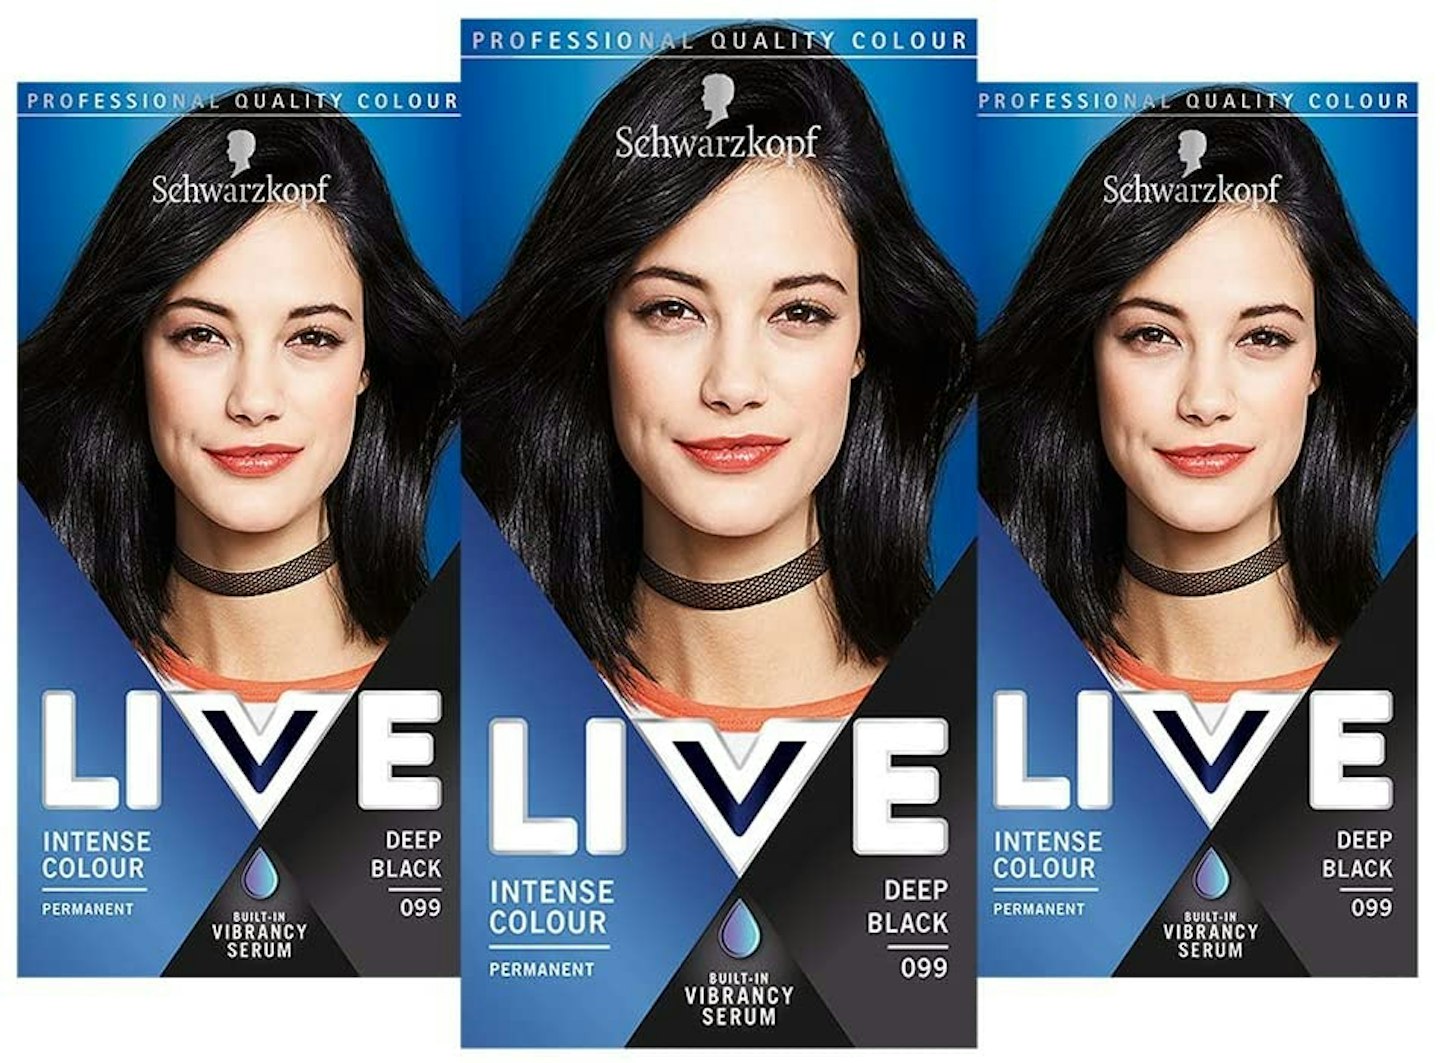 Schwarzkopf Live Intense Colour Permanent Hair Dye in Deep Black, 3-Pack